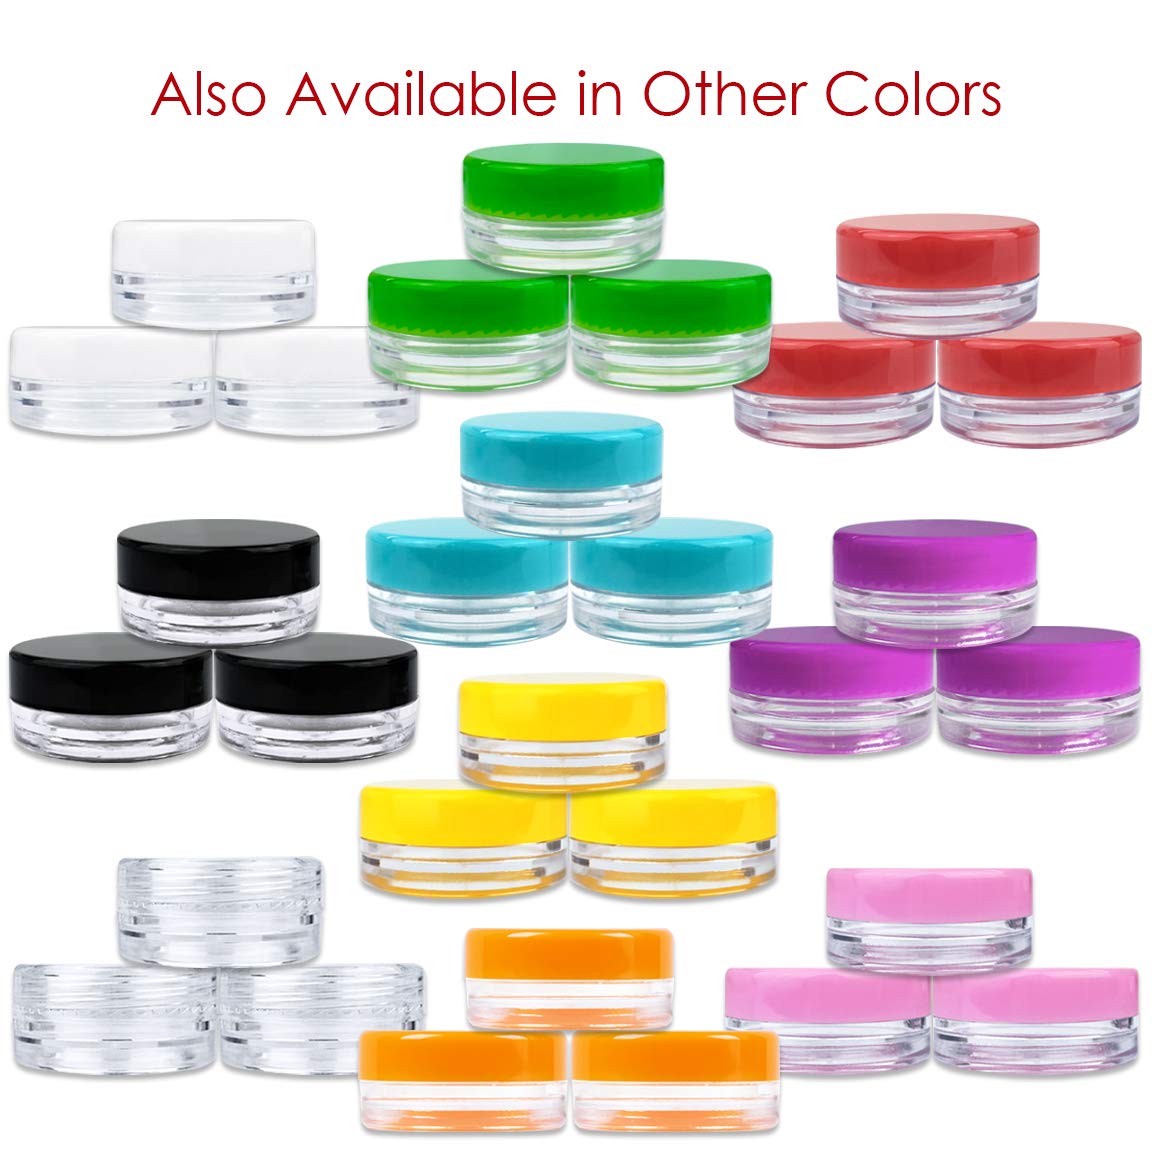 Beauticom (200 Pieces Jars + Lid) 3G/3ML Round Clear Jars with TEAL Sky Blue Screw Cap Lids for Scrubs, Oils, Toner, Salves, Creams, Lotions, Makeup Samples, Lip Balms - BPA Free